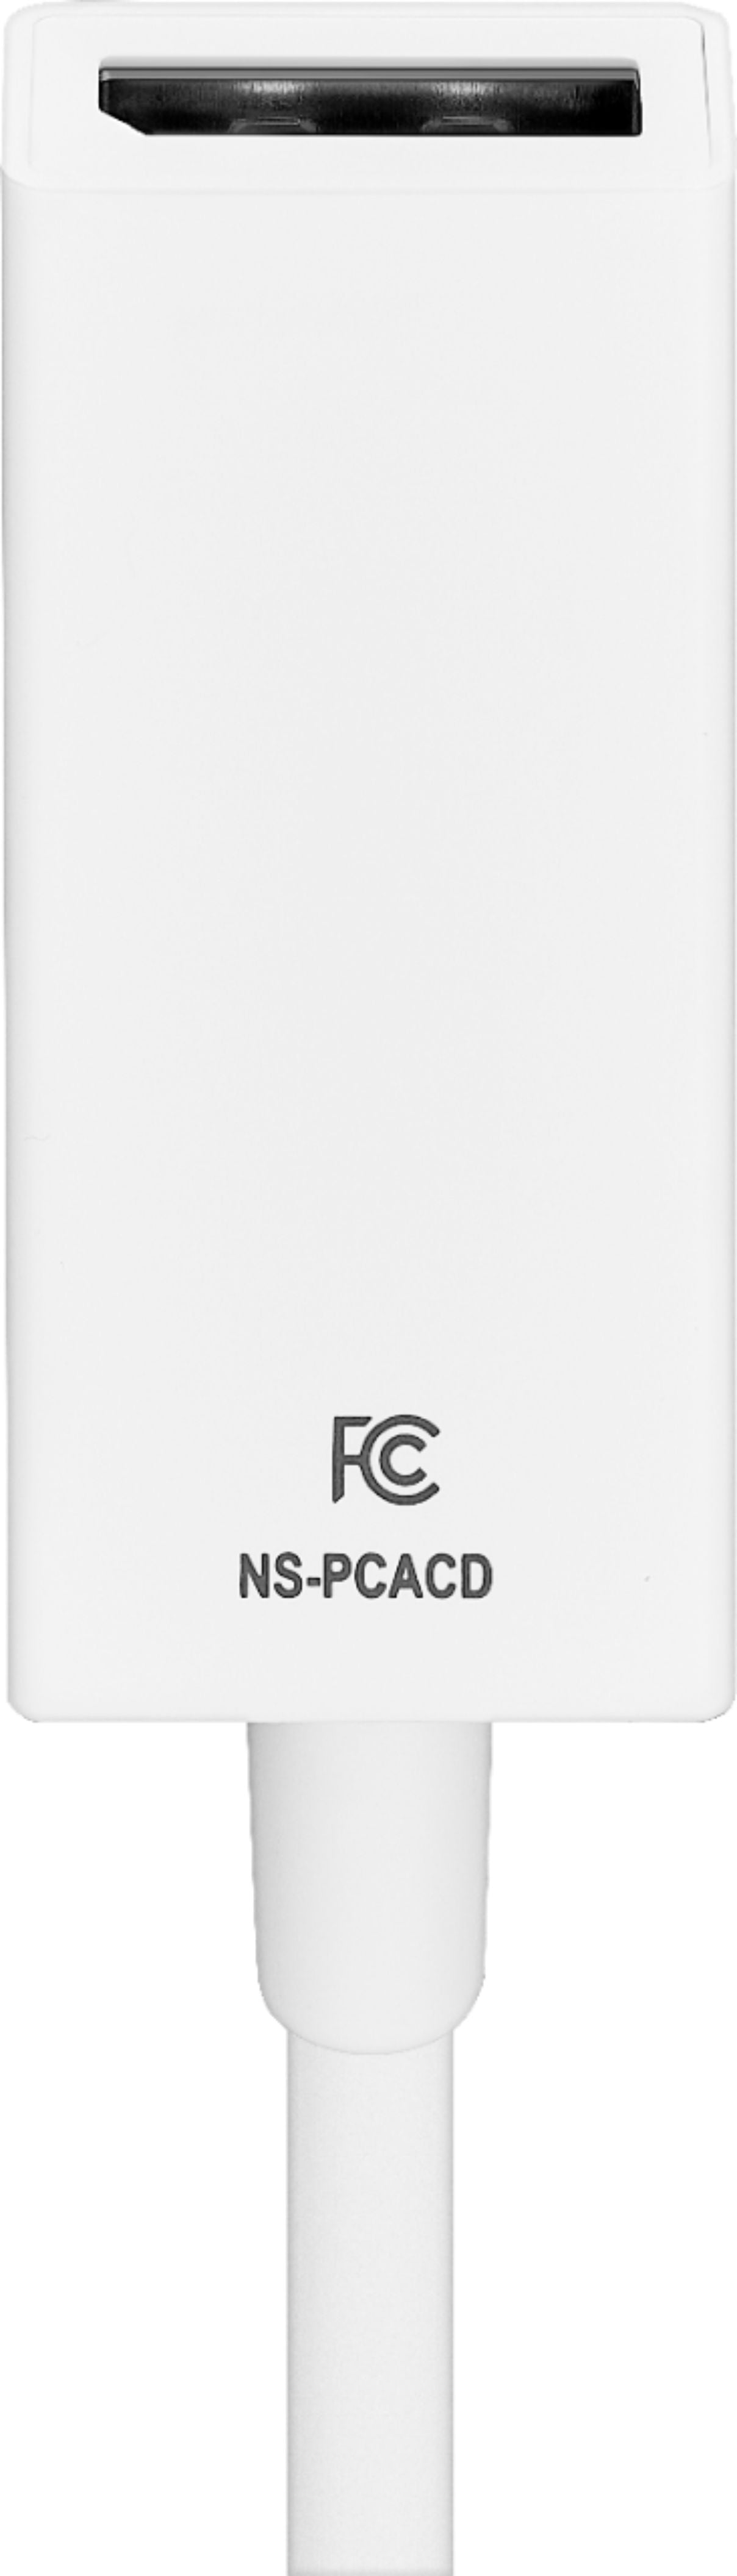 Insignia - USB-C to DisplayPort Adapter